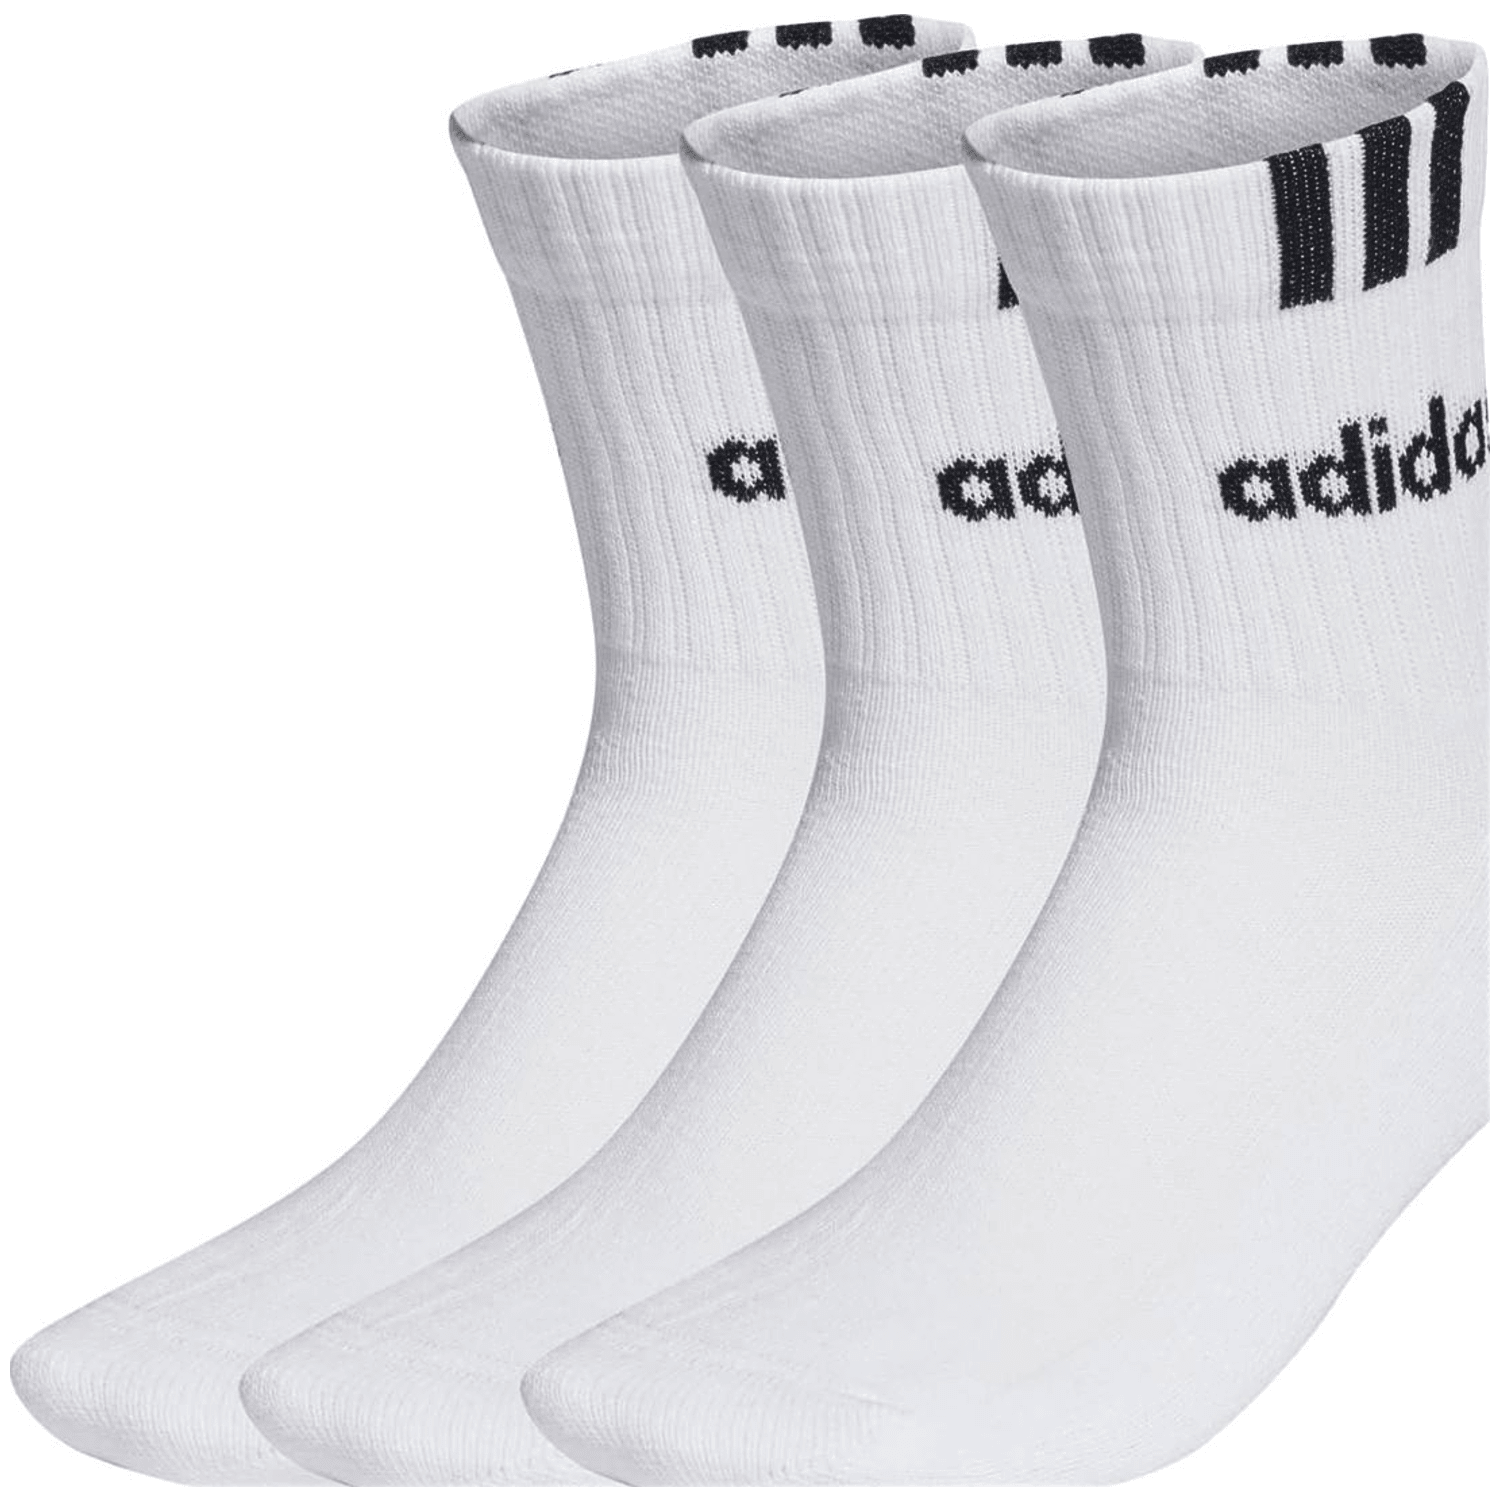 Adidas 3-Streifen Linear Half-Crew Cushioned Socken, 3 Paar Unisex